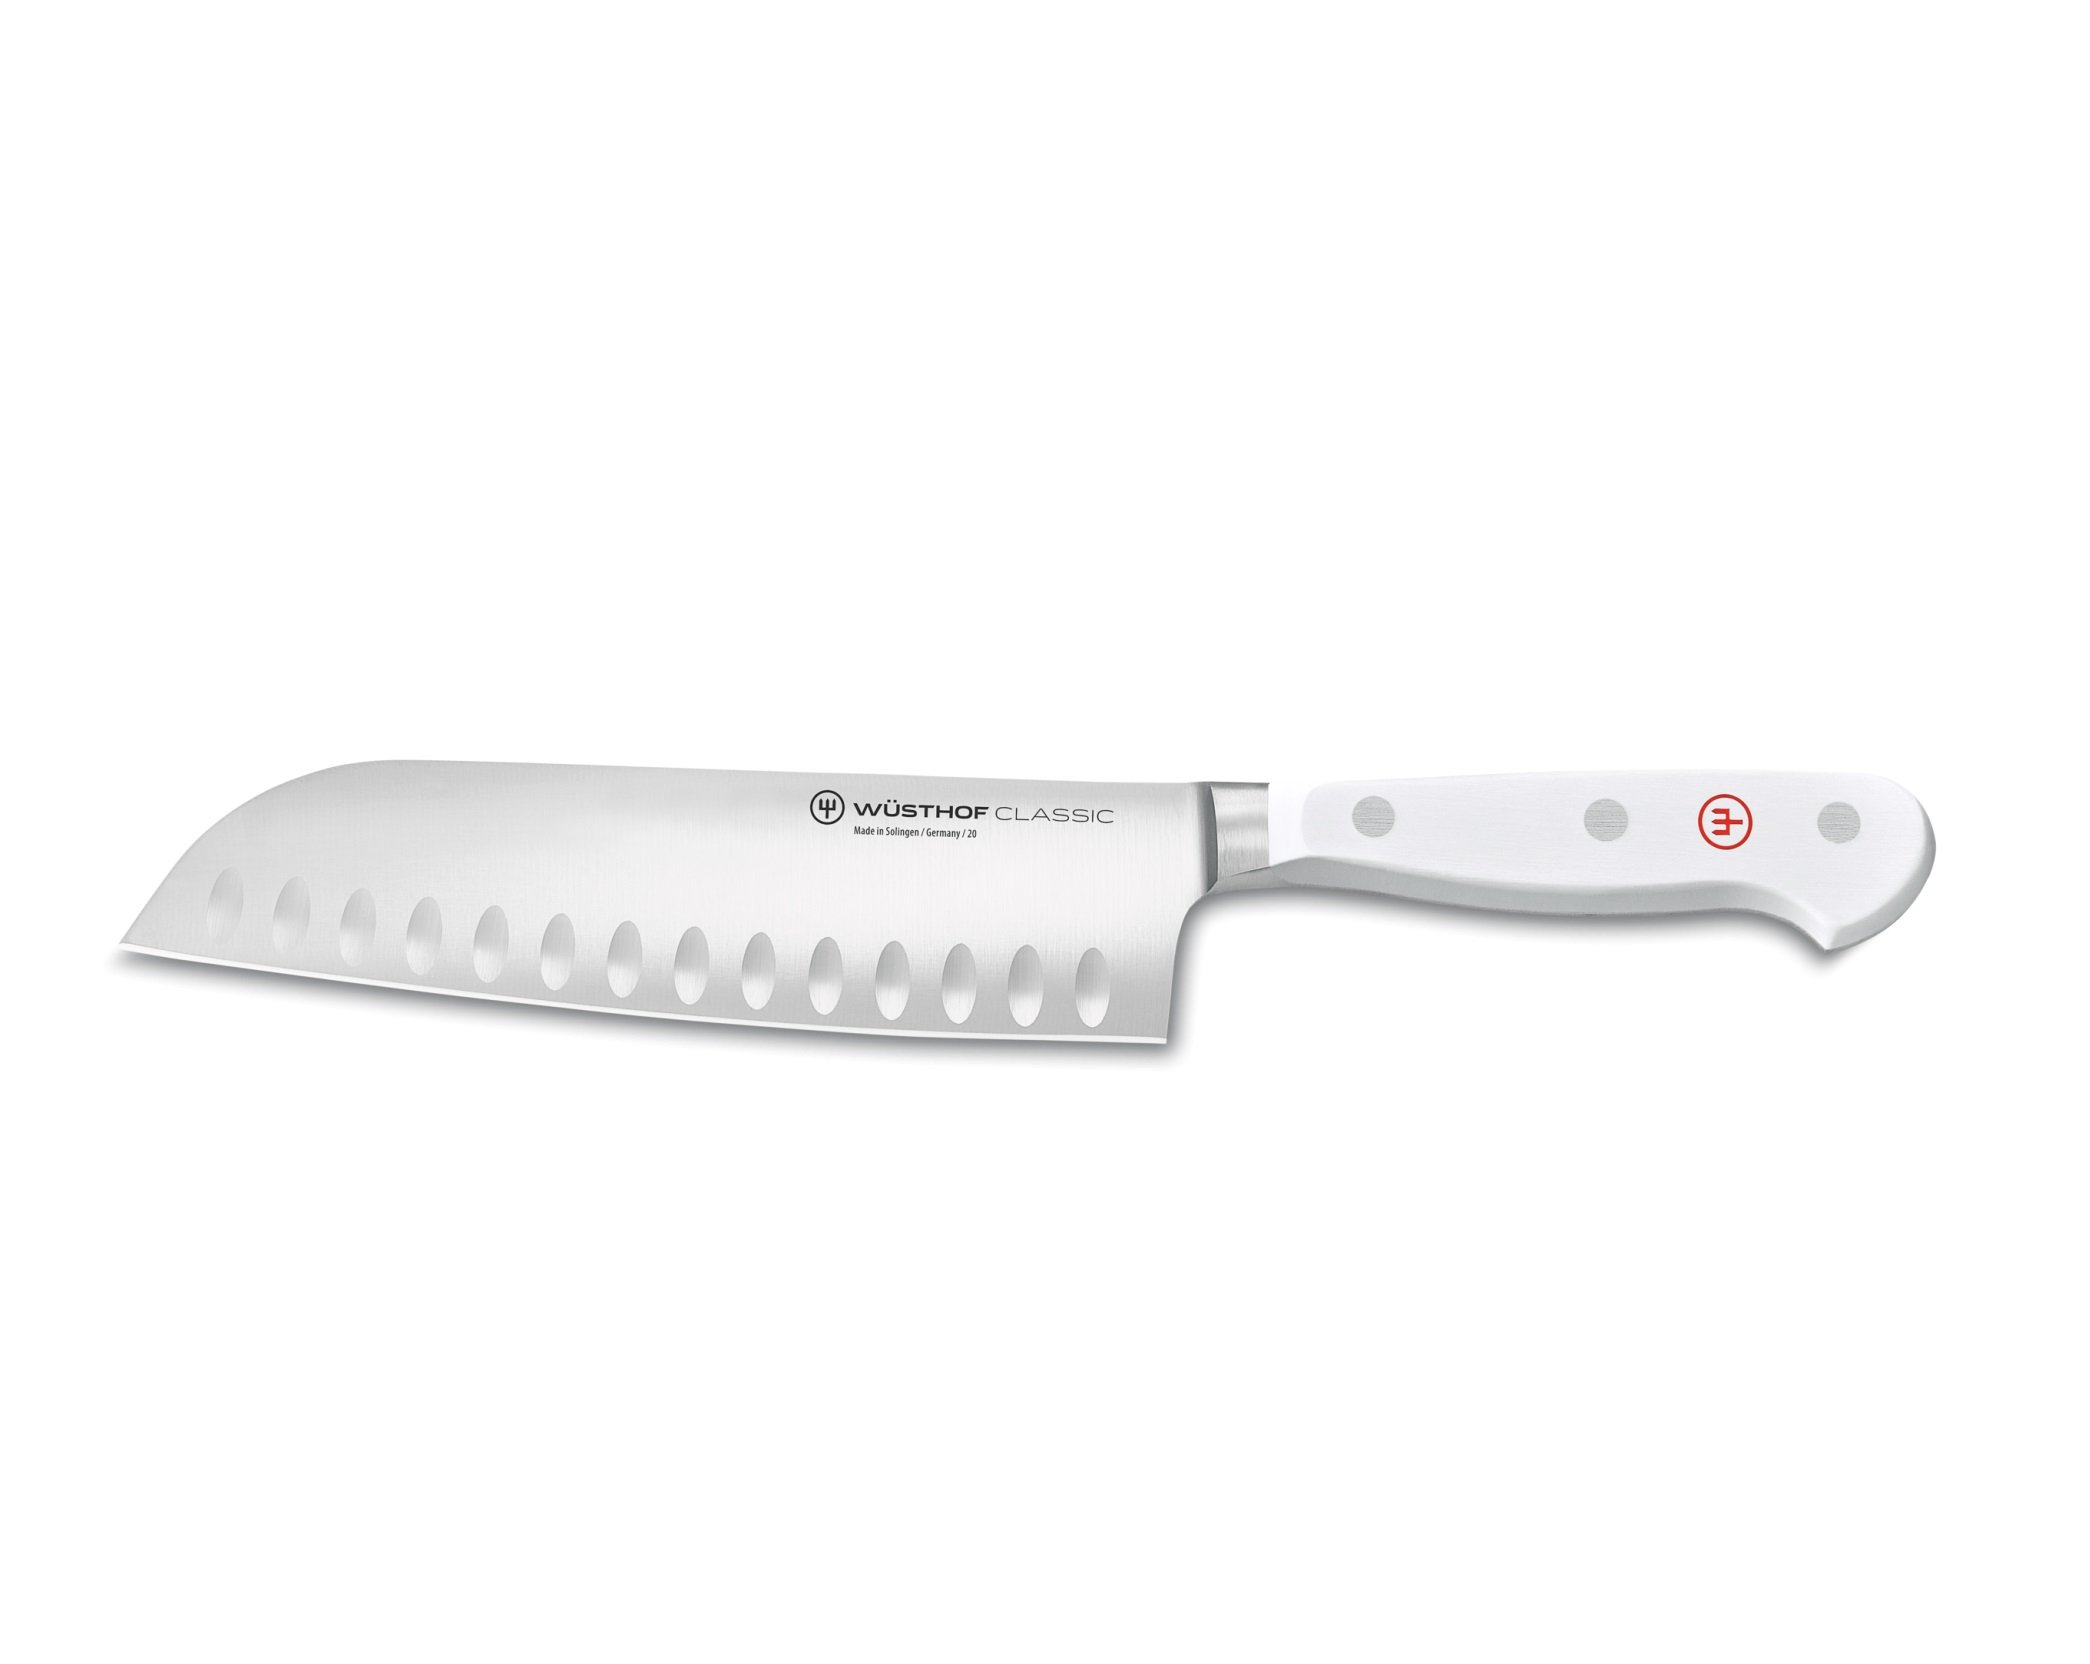 Блок з ножами, заточуванням та ножицями кухонними Wuesthof Classic White, 7 предметів (1090270601) - фото 4